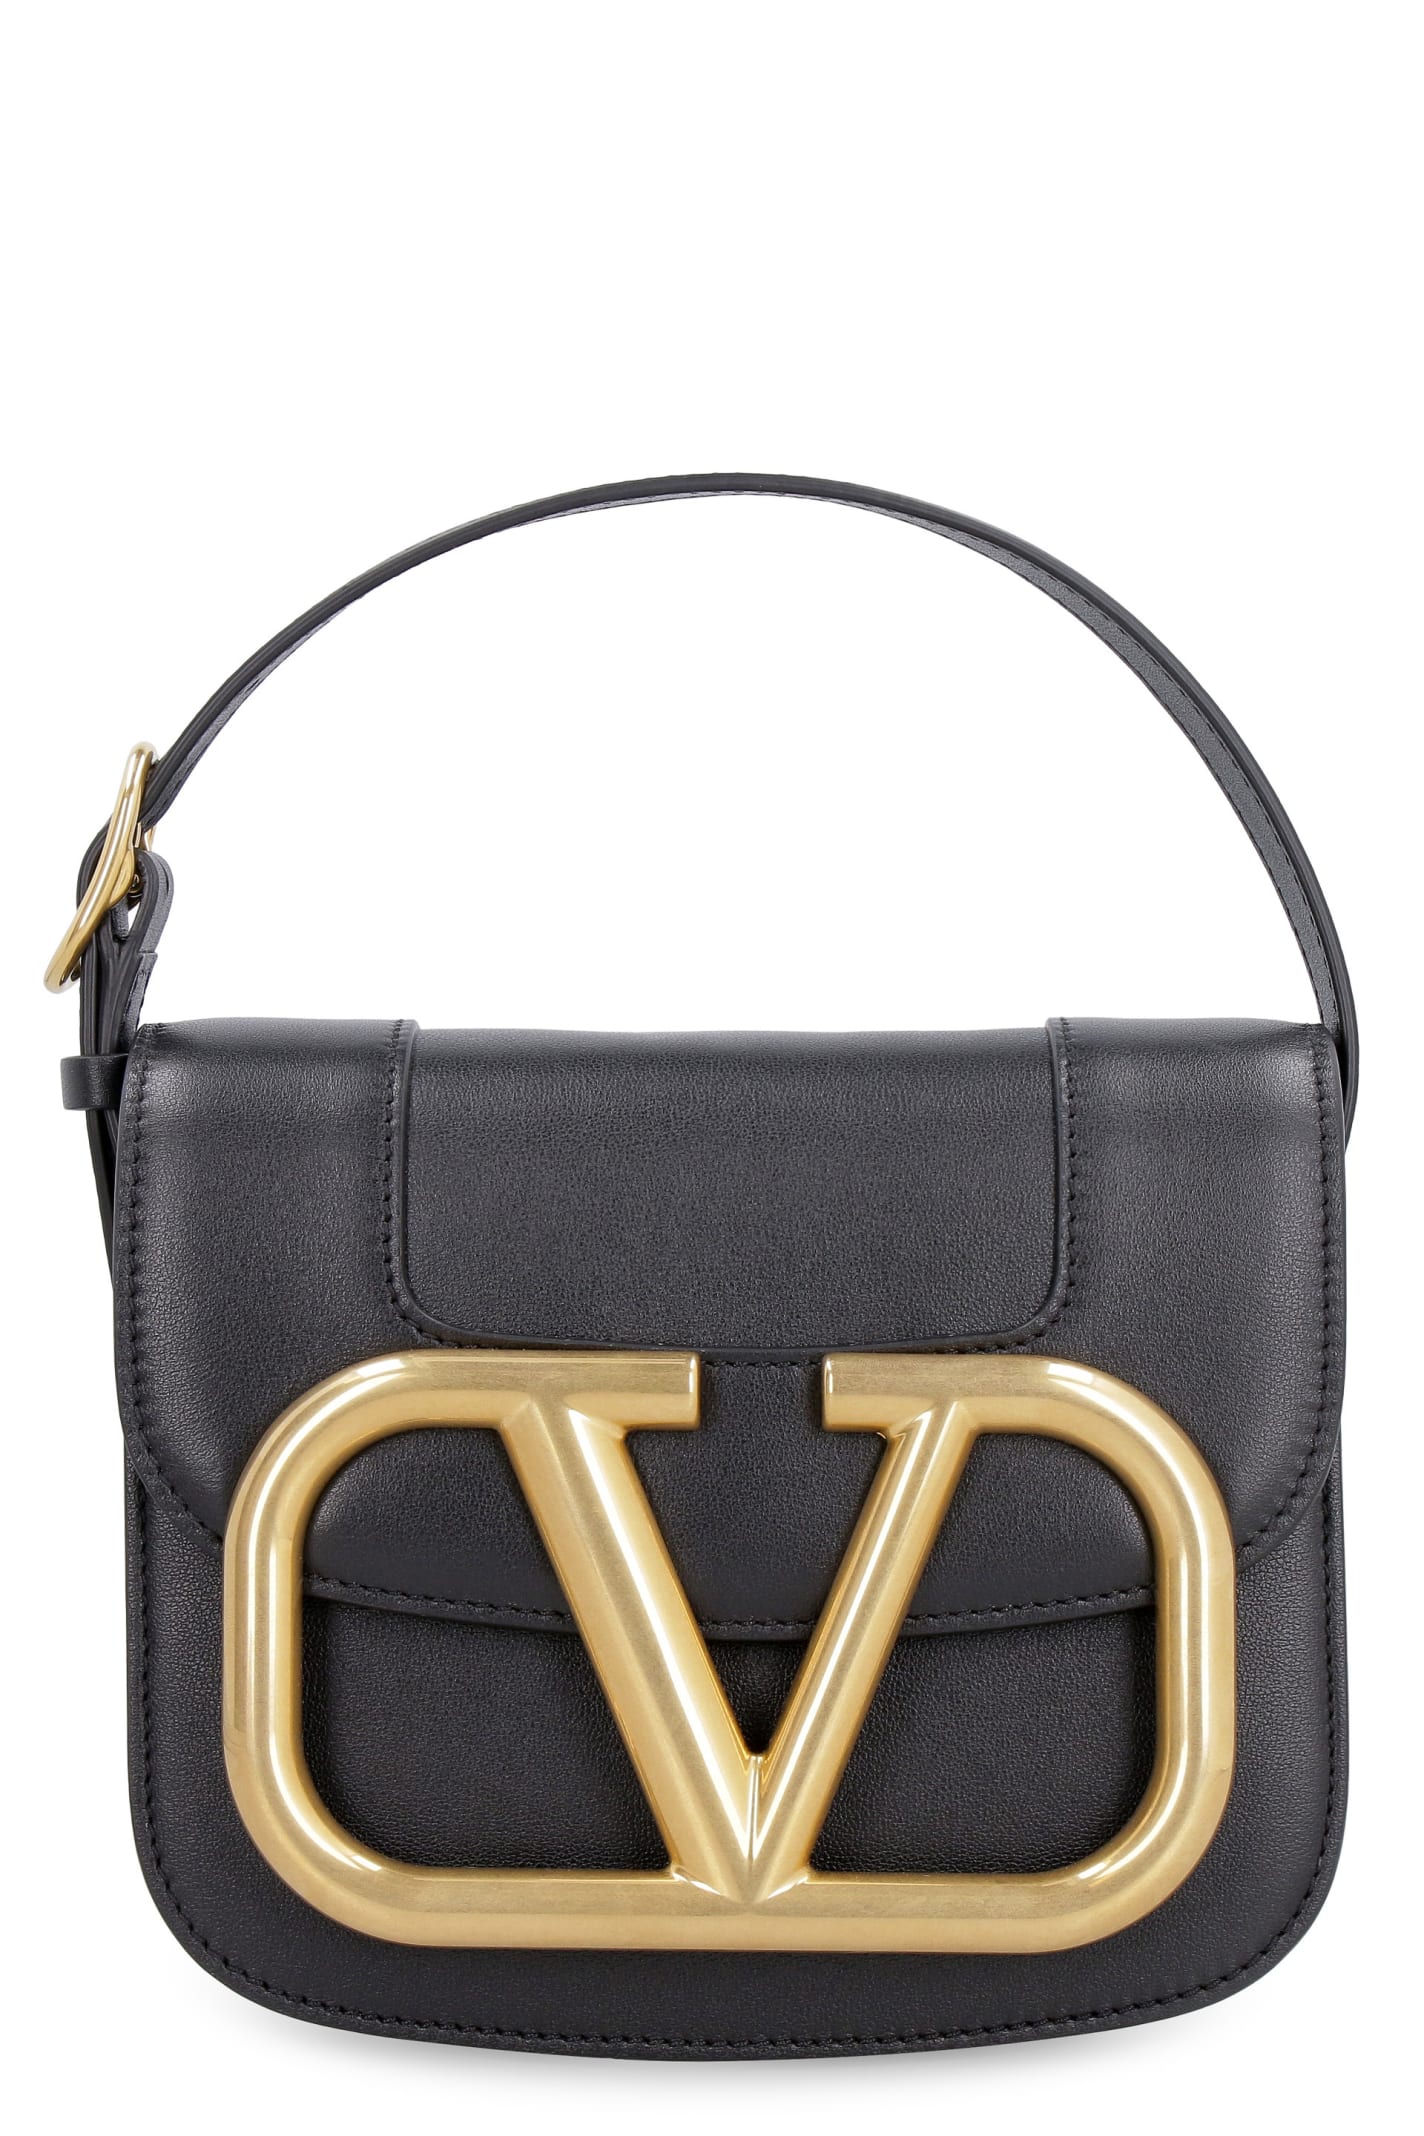 Valentino Valentino Garavani - Supervee Leather Handbag